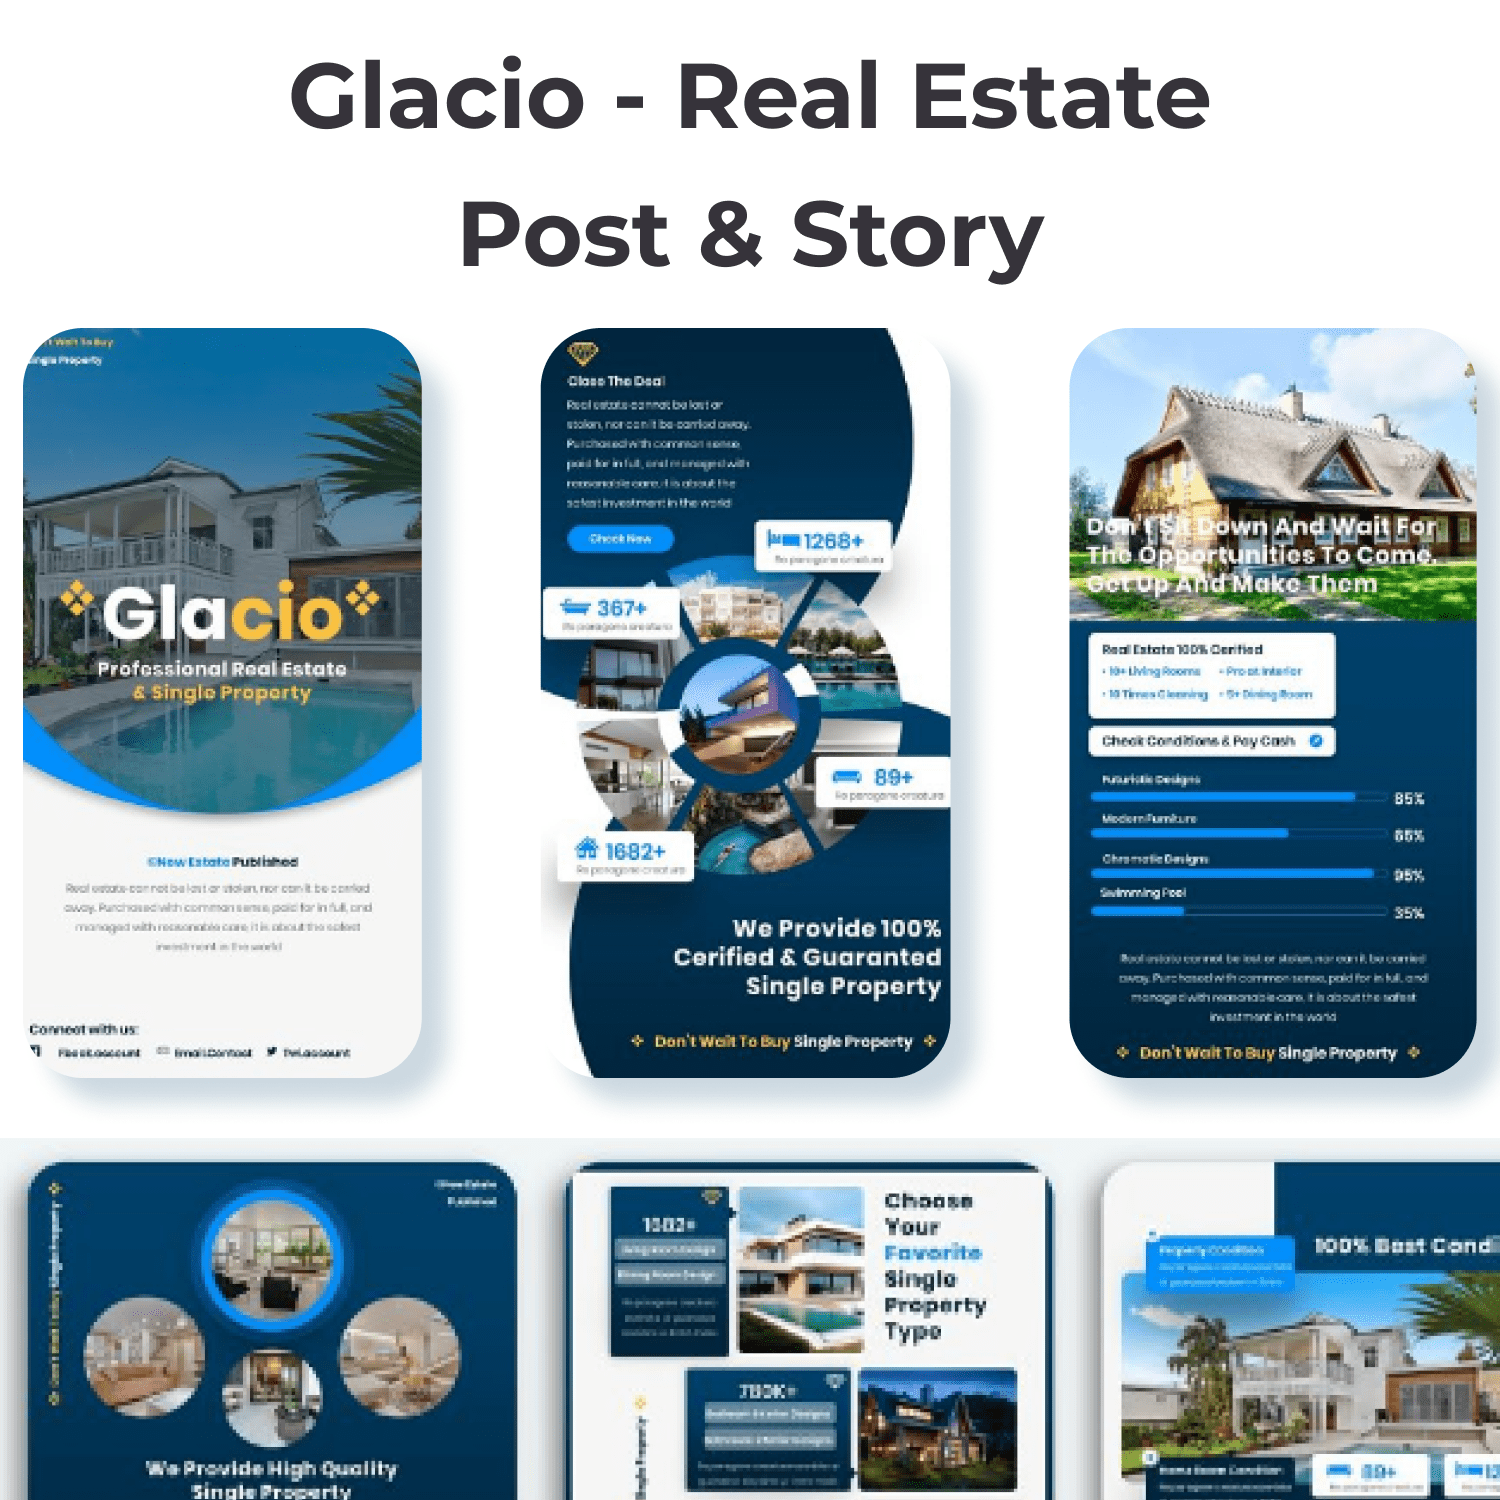 Glacio - Real Estate Post & Story cover image.